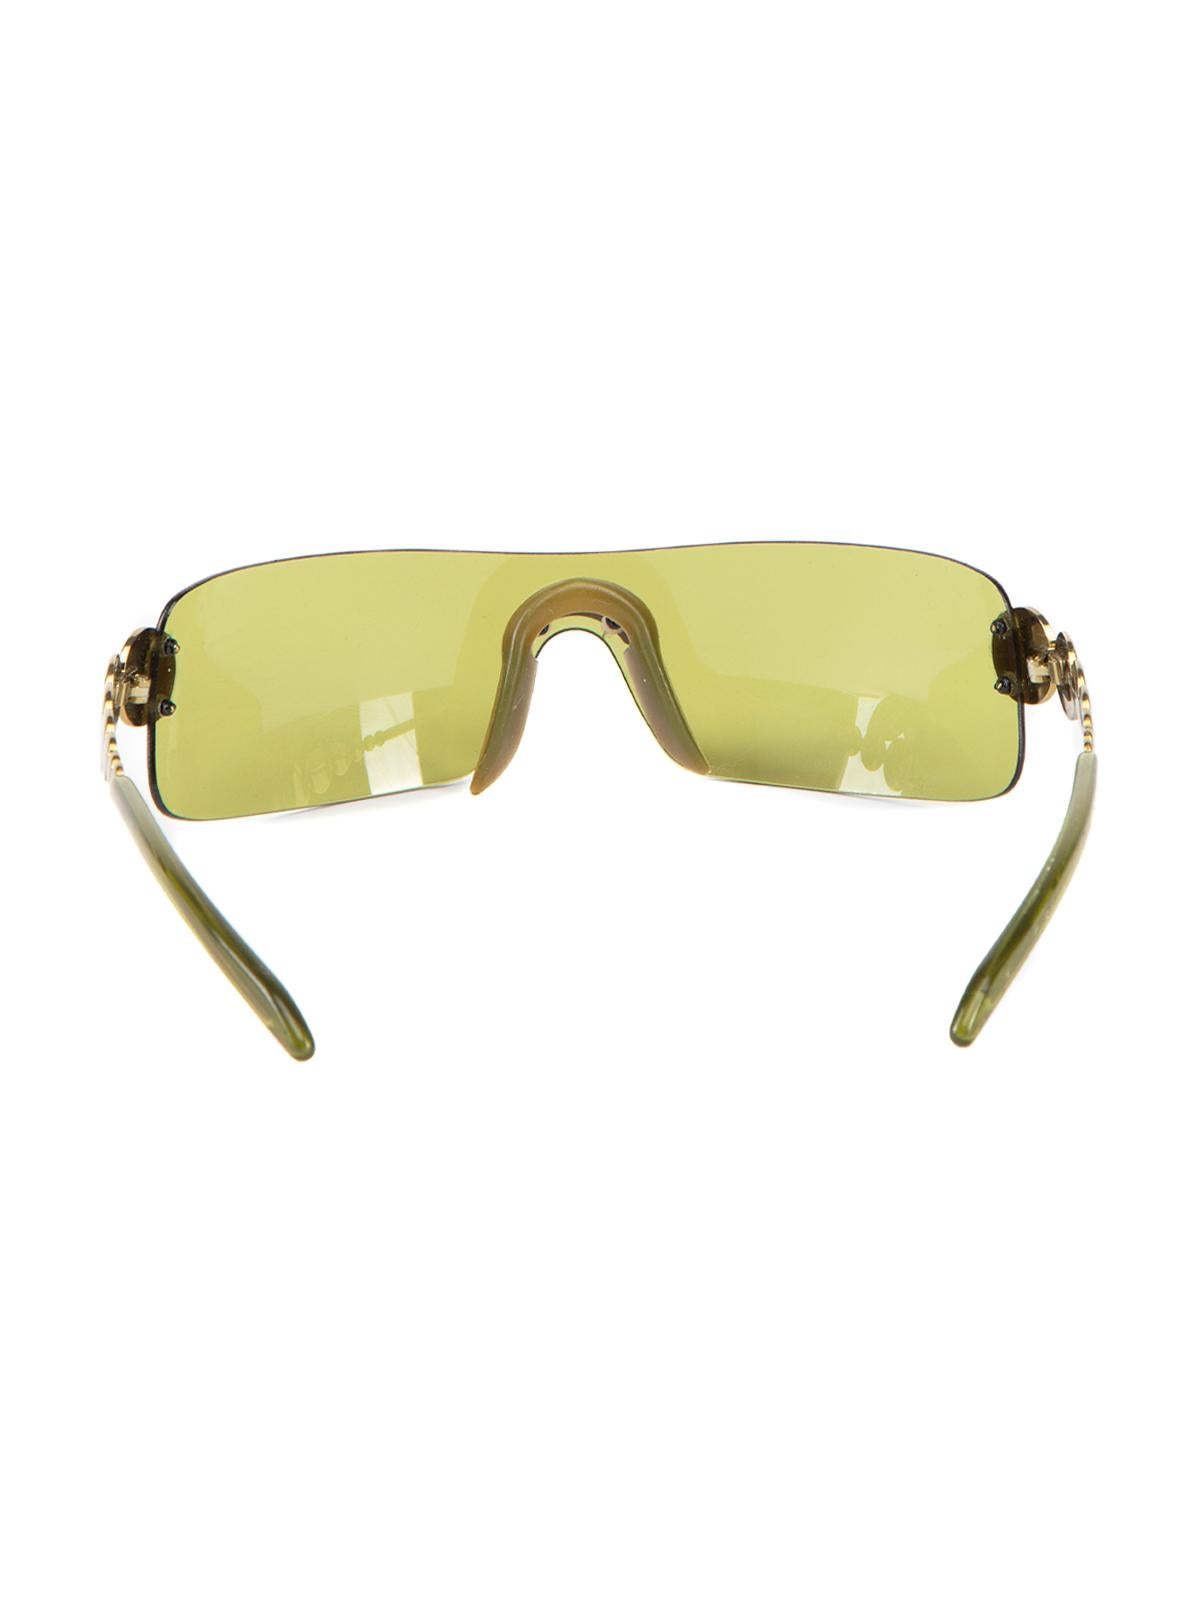 Pre-Loved Christian Dior Women's Green Tint Sunglasses 5